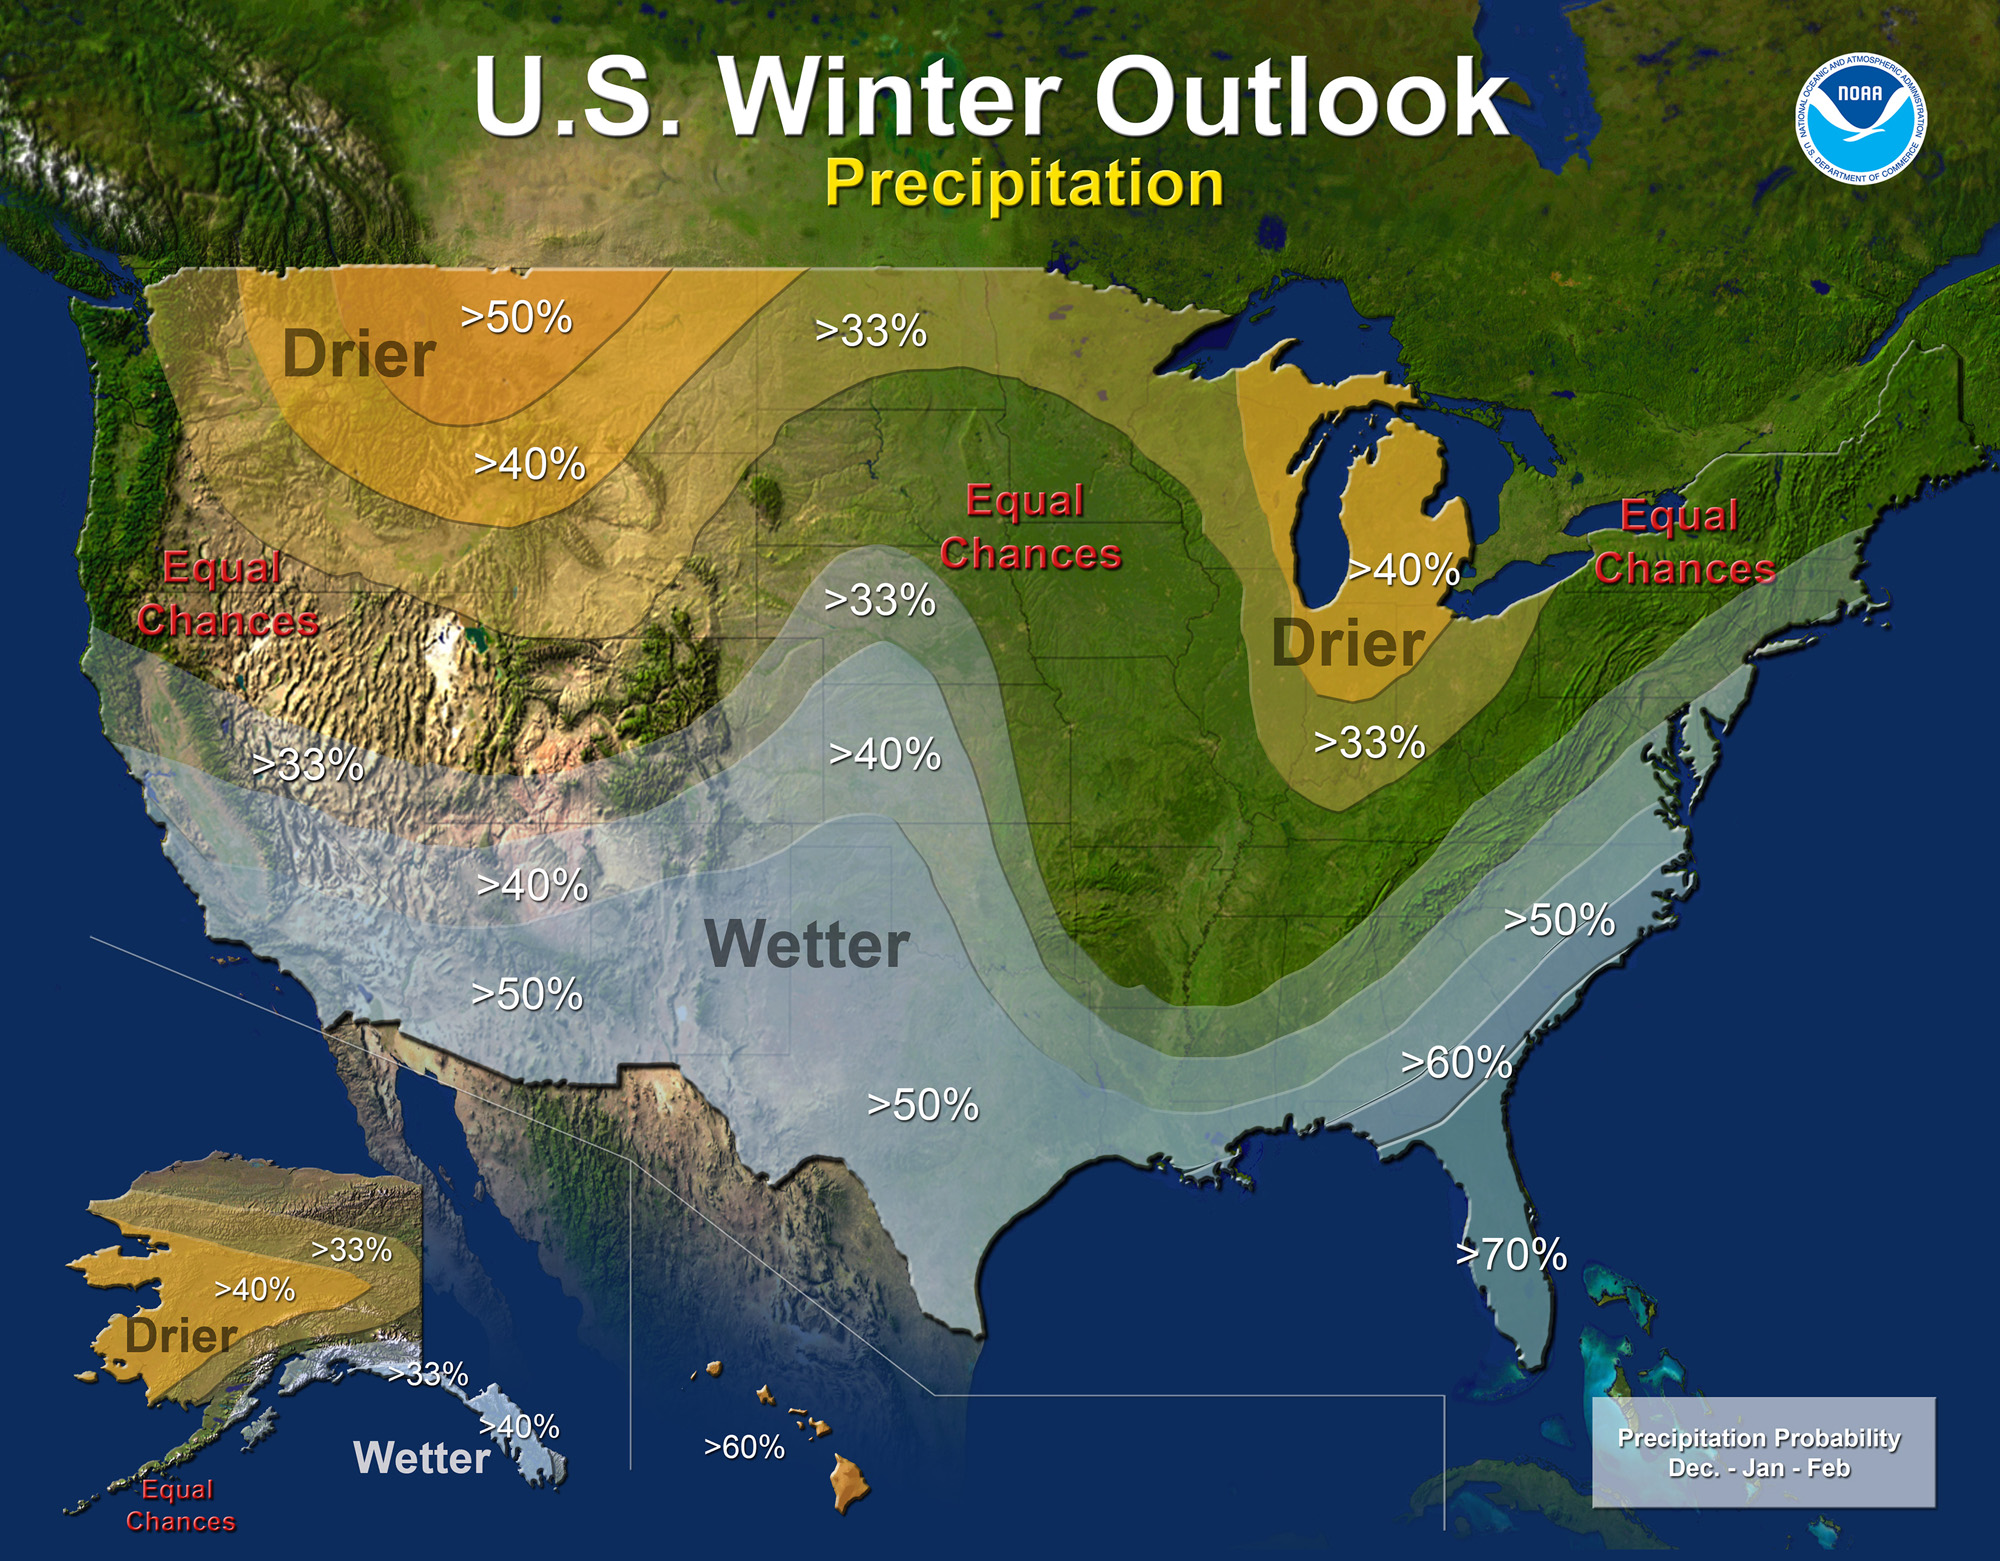 Precipitation - U.S. Winter Outlook: 2015-2016 (Credit: NOAA)